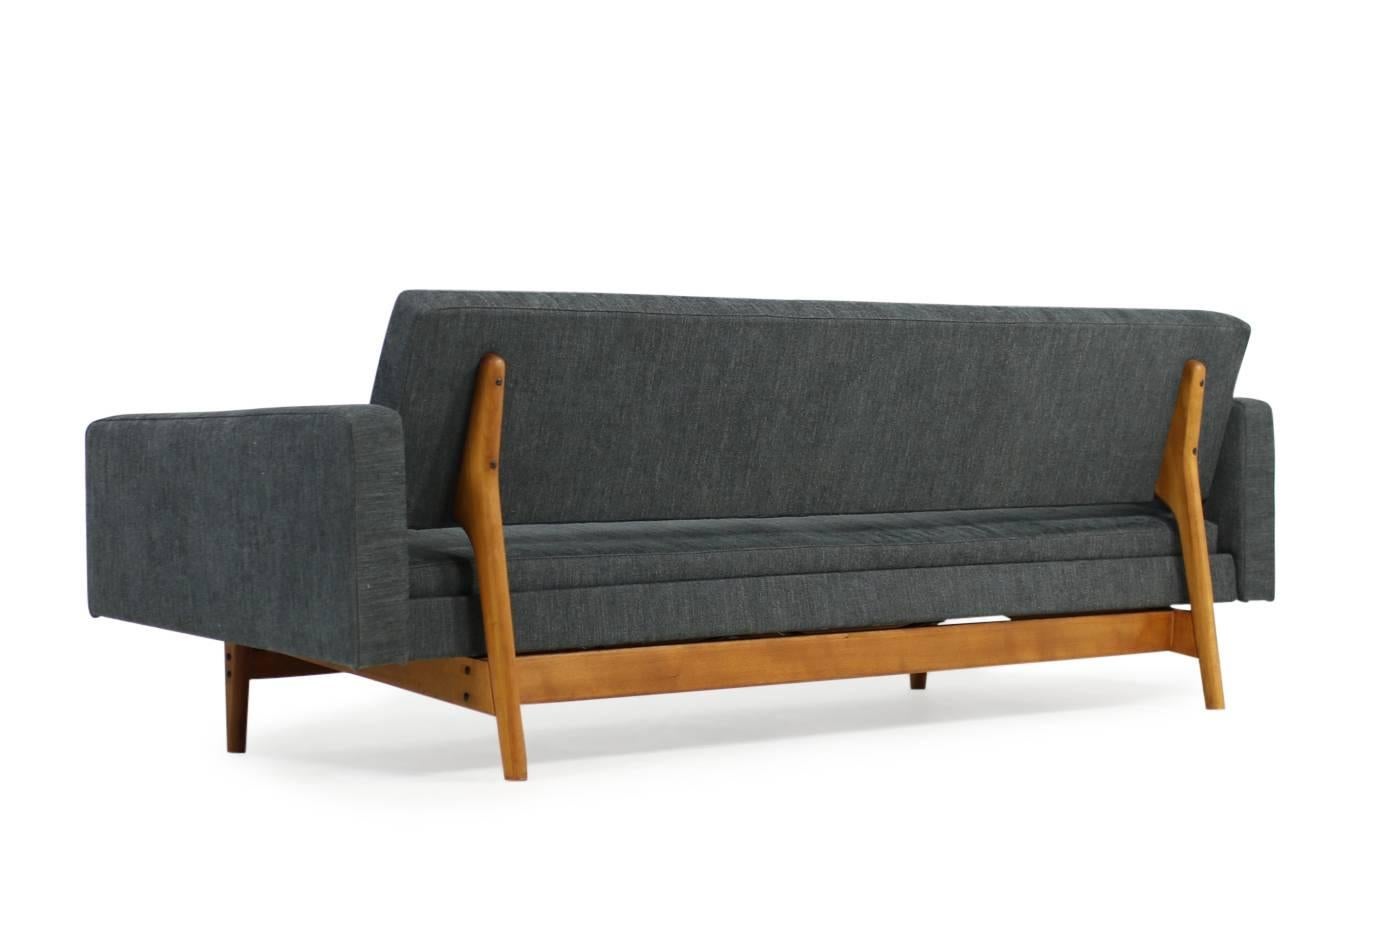 Fabric 1960s Daybed by Karl Erik Ekselius for Joc Sweden, Scandinavian Modern, Sofa